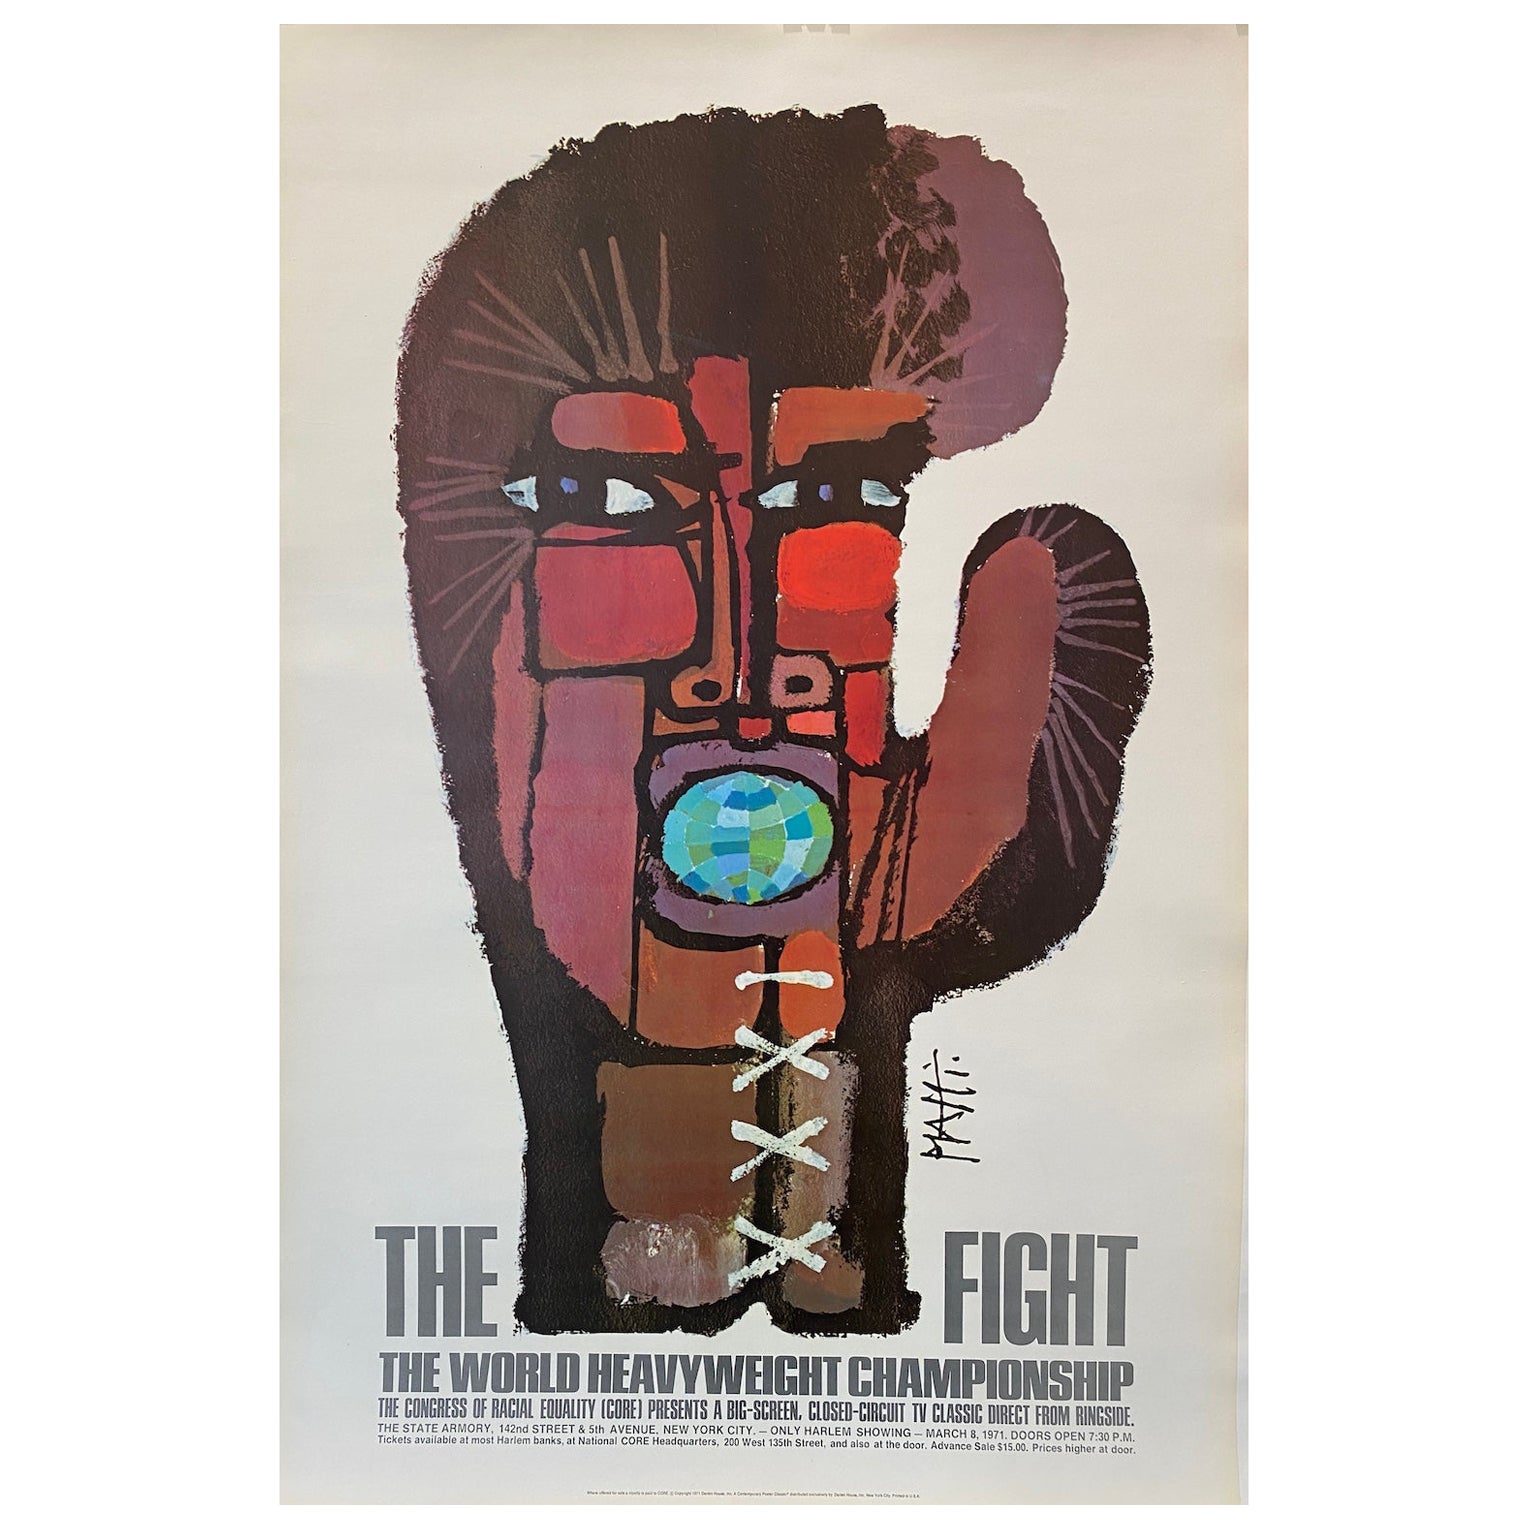 Muhammad Ali 'THE WORLD HEAVYWEIGHT CHAMPIONSHIP' Original Vintage Poster, 1971